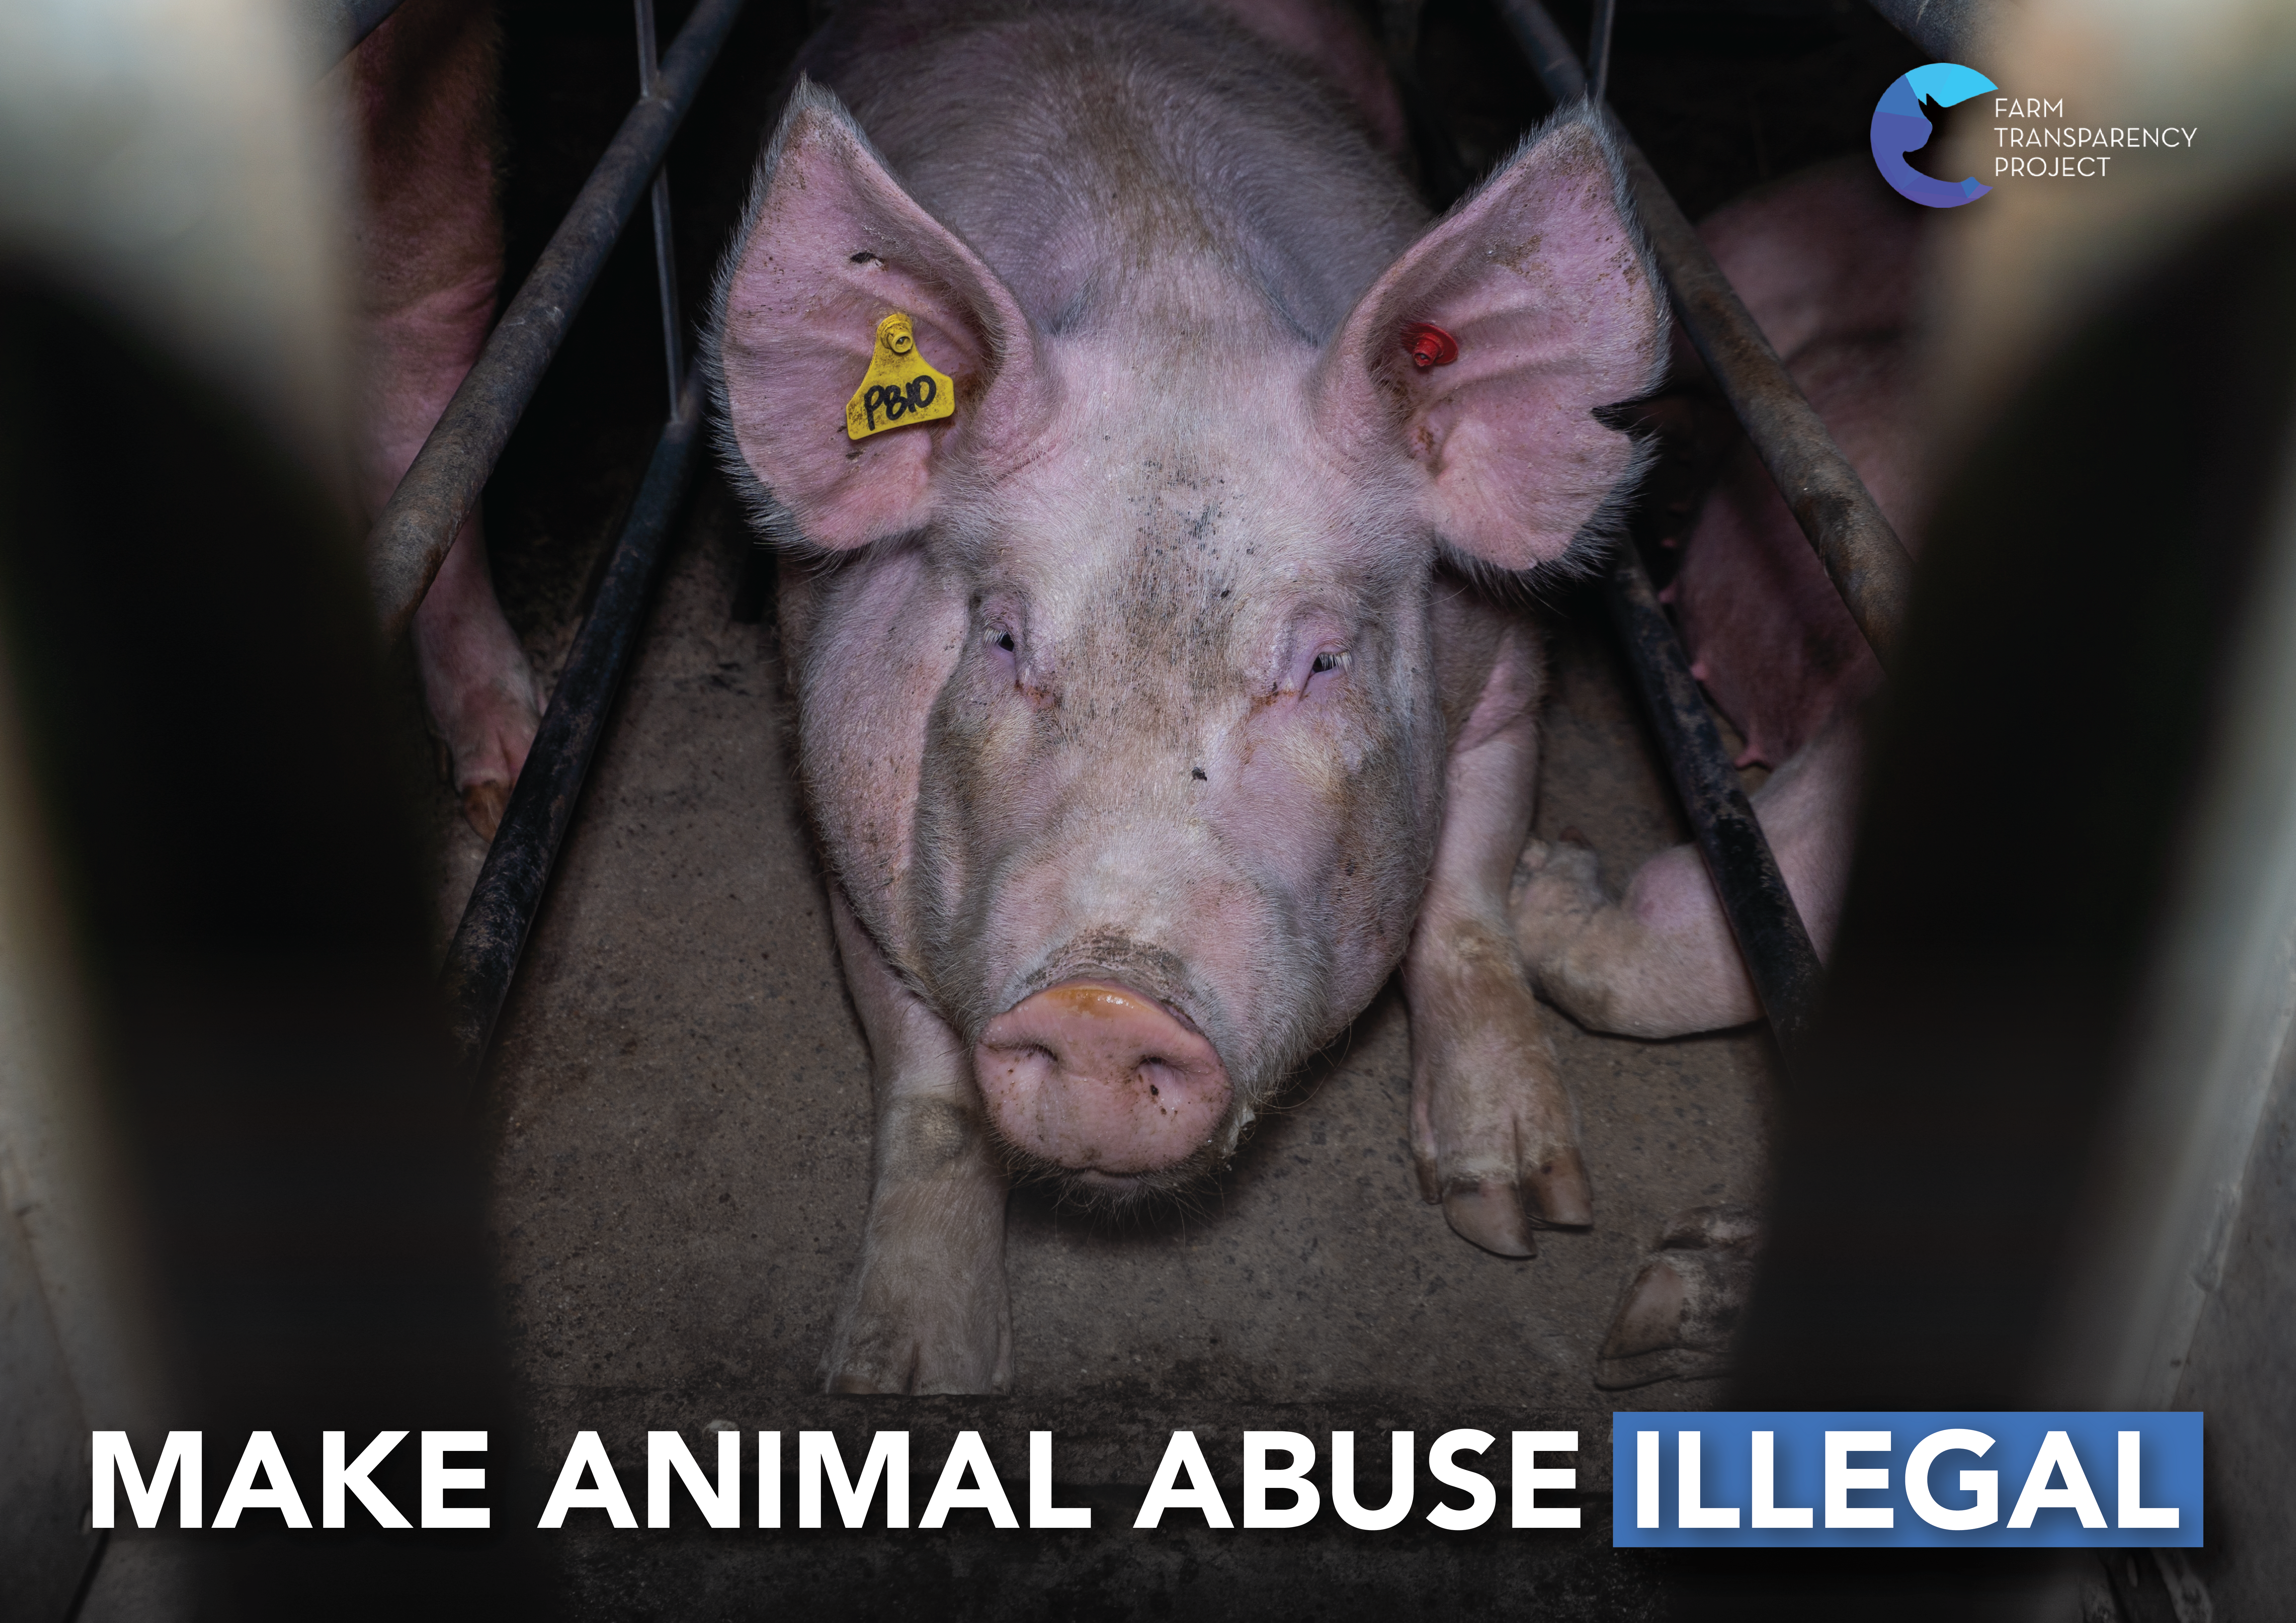 Make Animal Abuse Illegal (Sow Stall) Poster Design